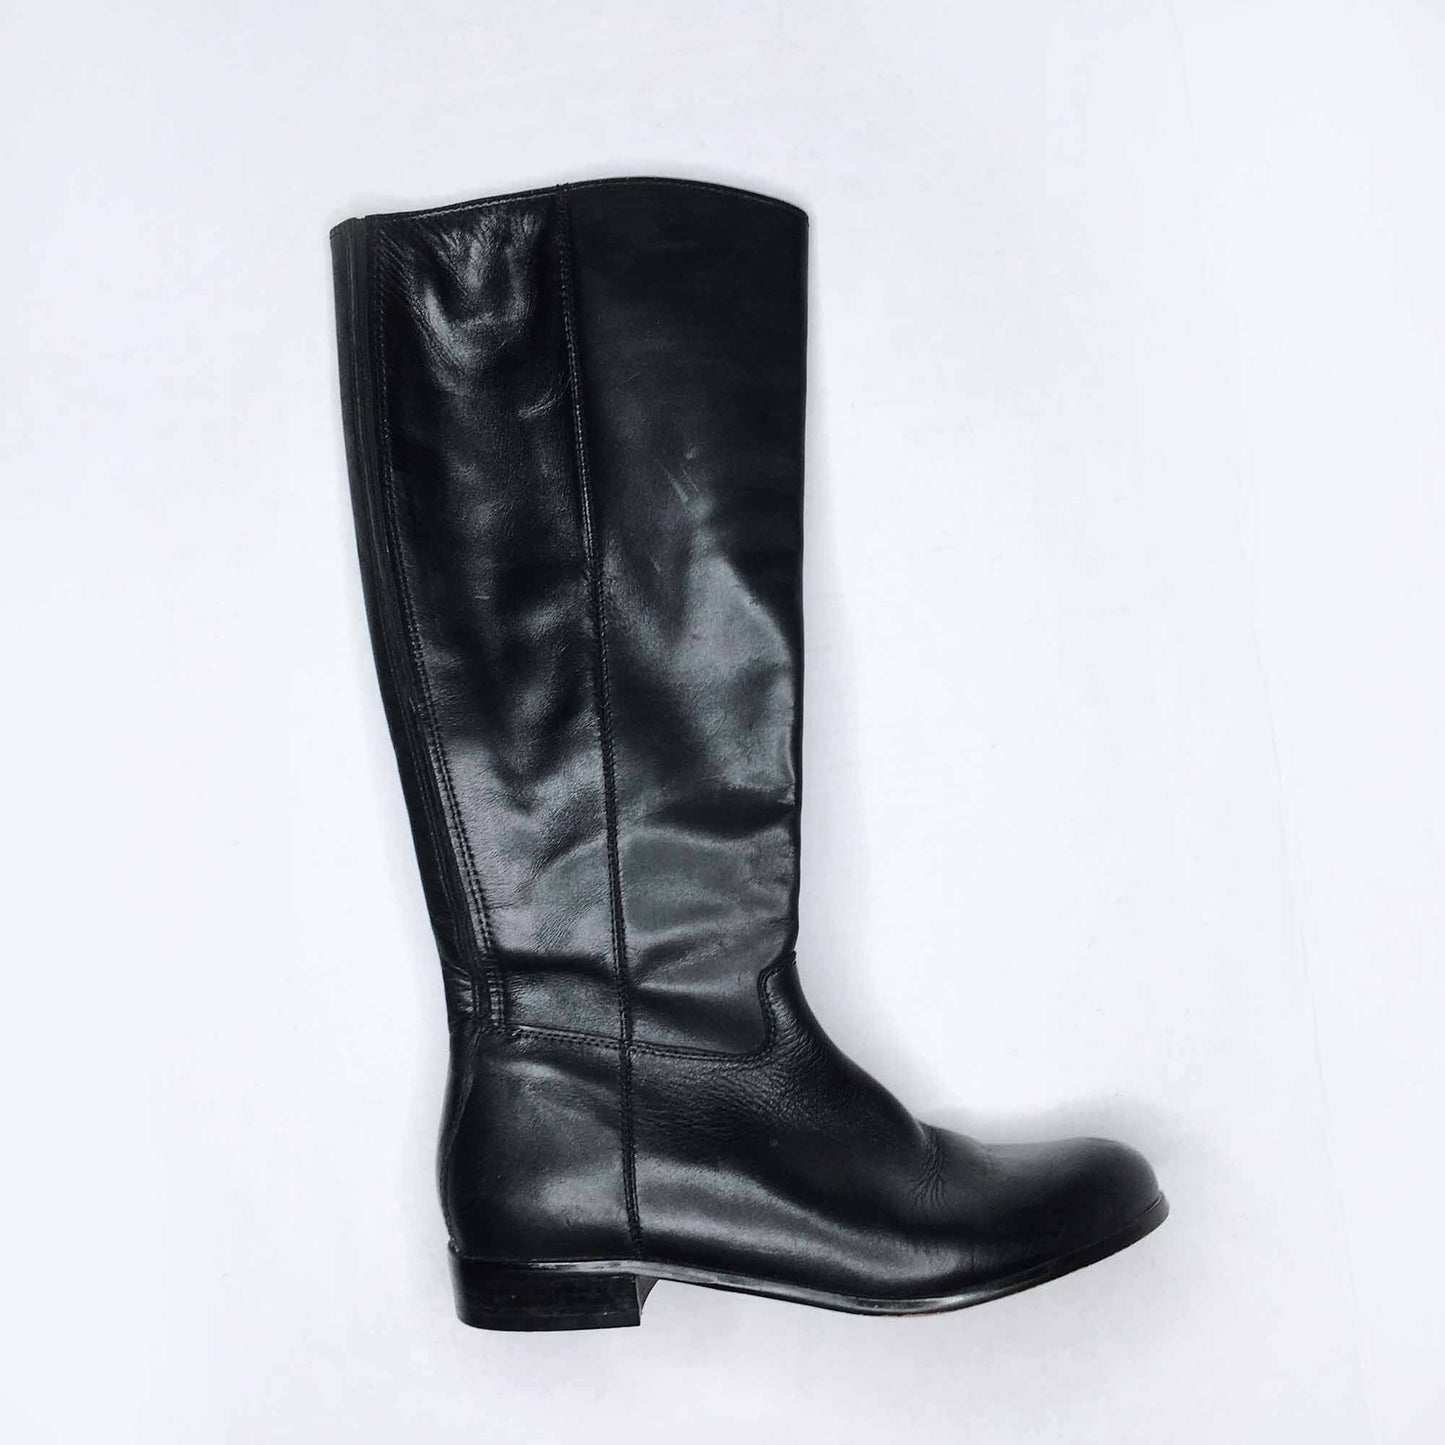 Corso Como tall leather riding boot - size 7